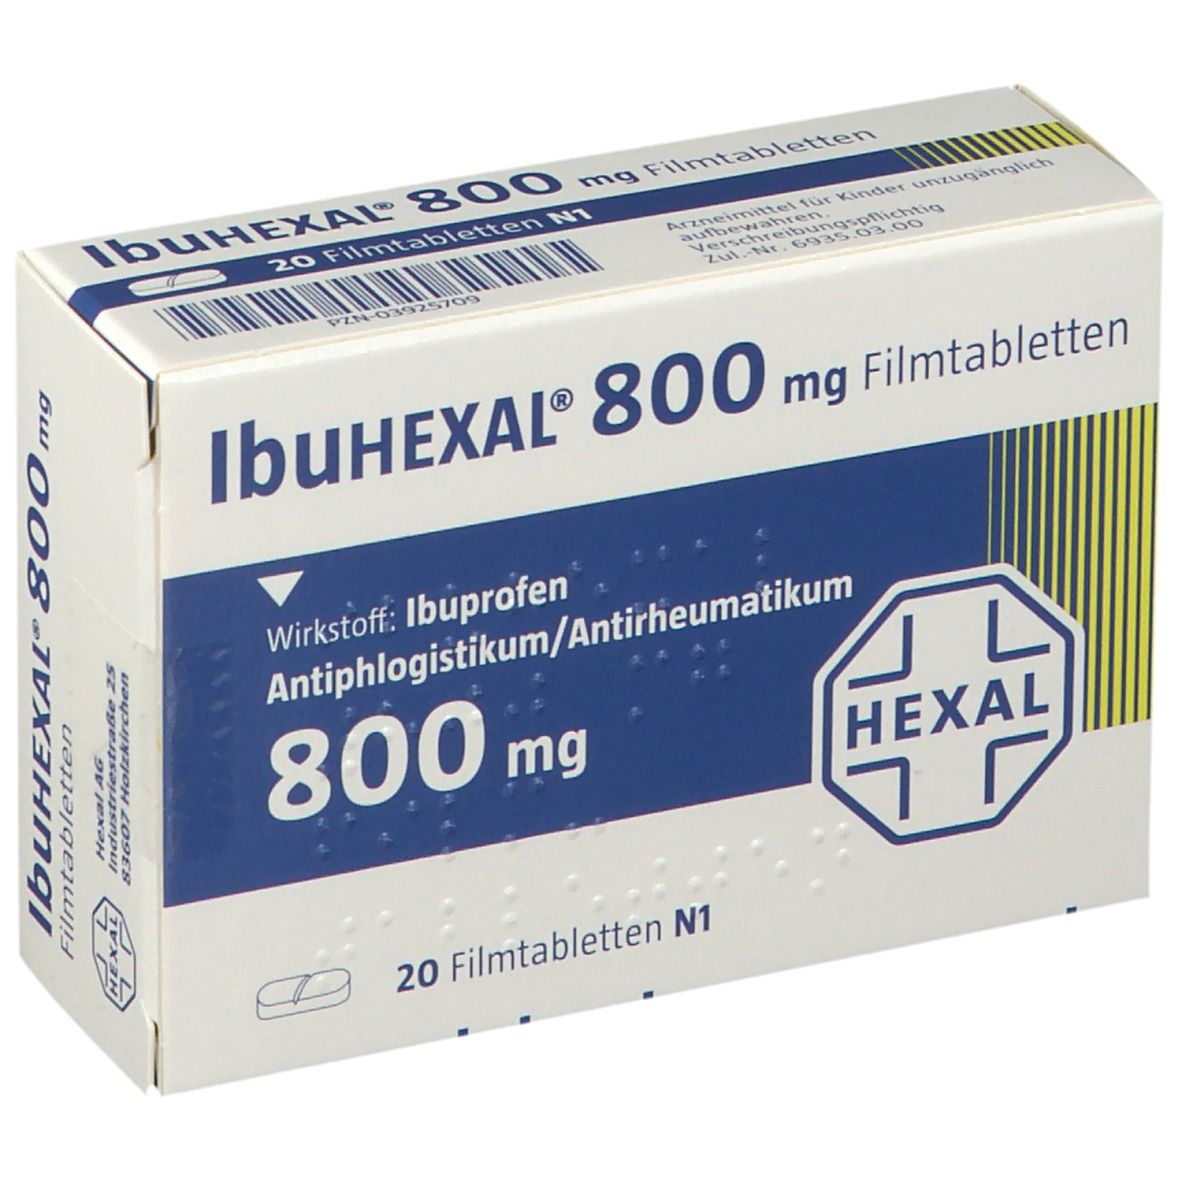 IbuHEXAL® 800 mg